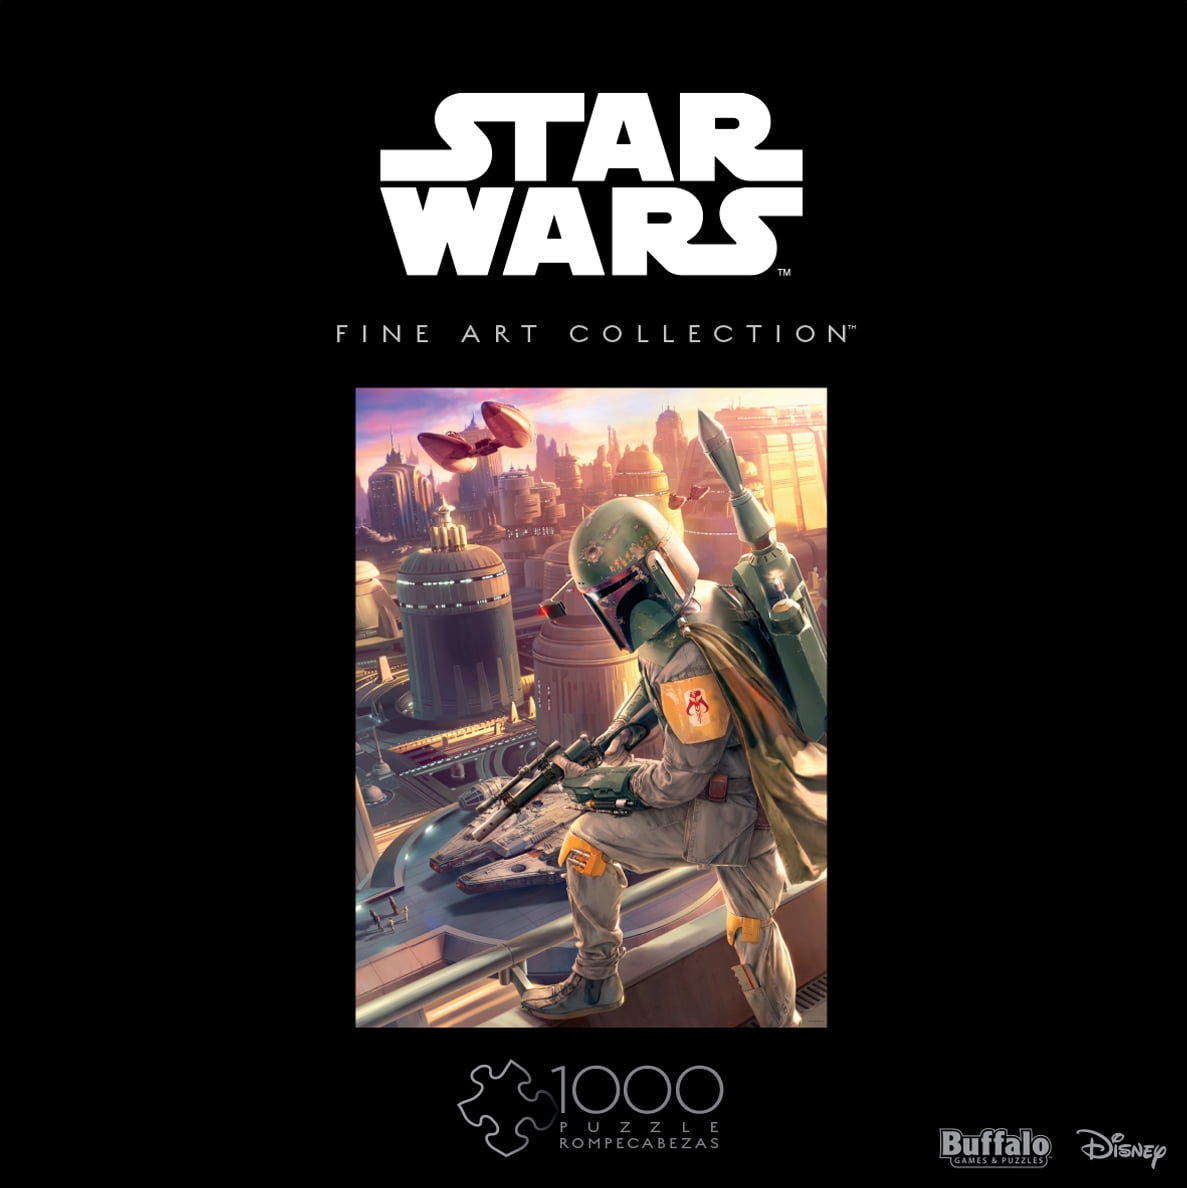 Star Wars Jigsaw Puzzle 1000 PC Pinball Art Disney Buffalo Games Luke Skywalker for sale online 